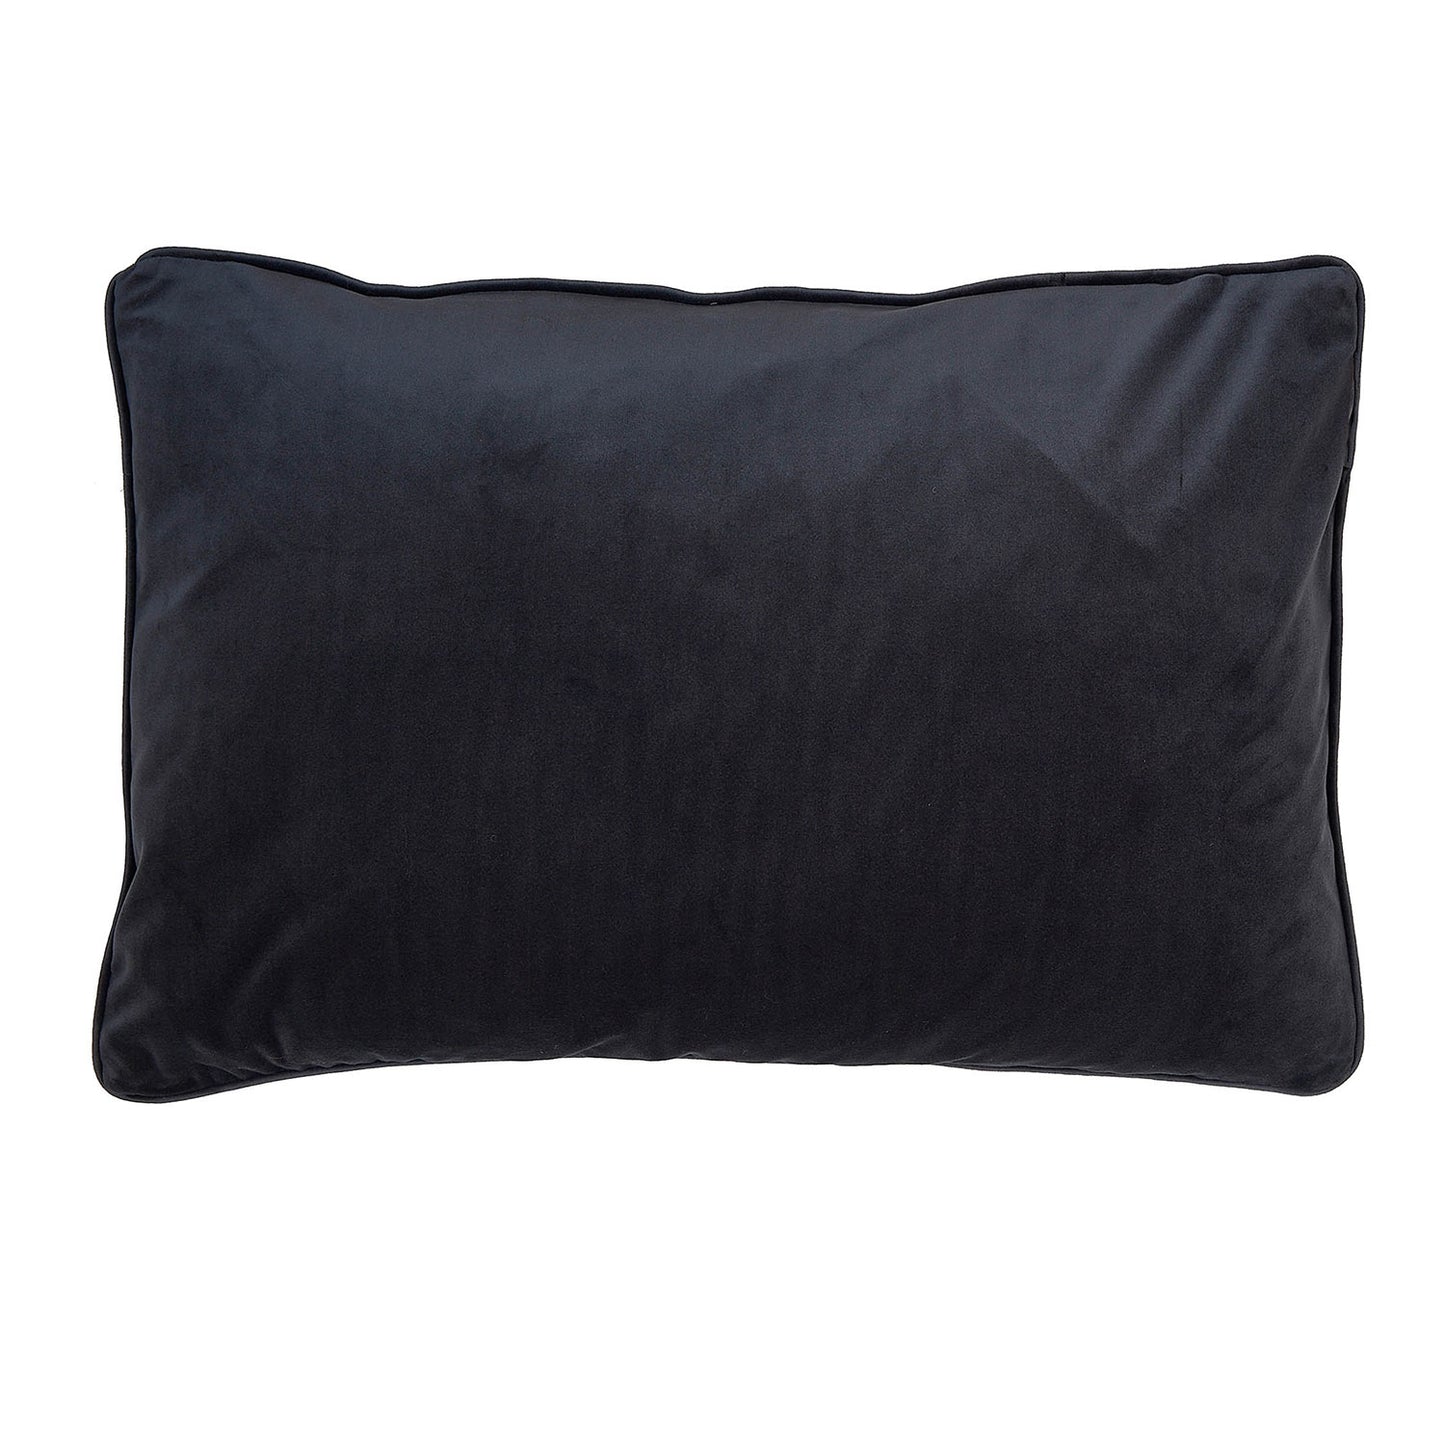 Clarissa Hulse Teasel French Navy Velvet Cushion (40cm x 60cm)